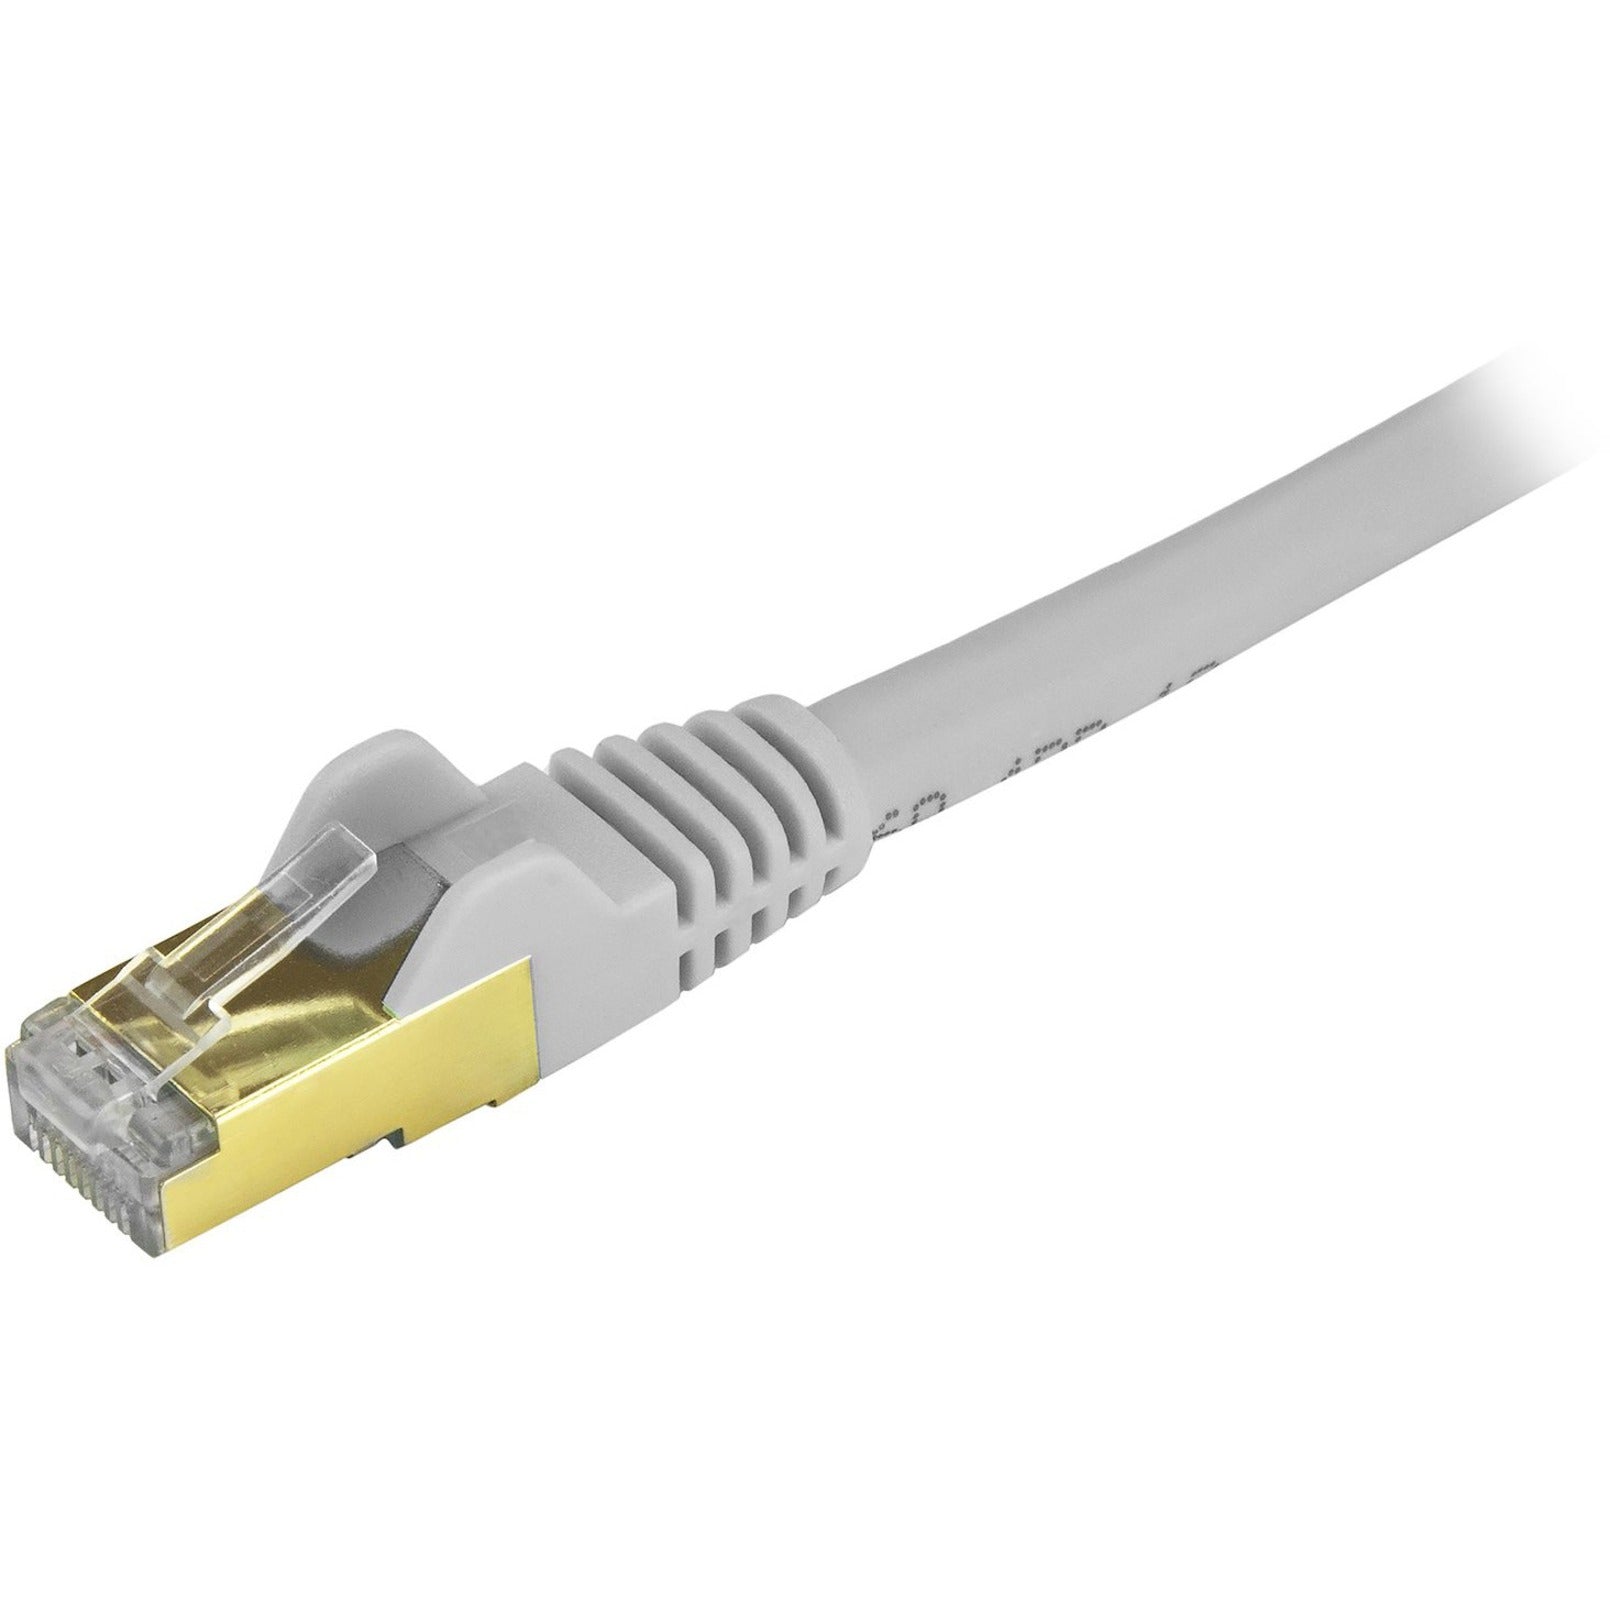 StarTech.com C6ASPAT5GR Cat6a Ethernet Patch Cable - Shielded (STP) - 5 ft., Gray, Snagless RJ45 Ethernet Cord